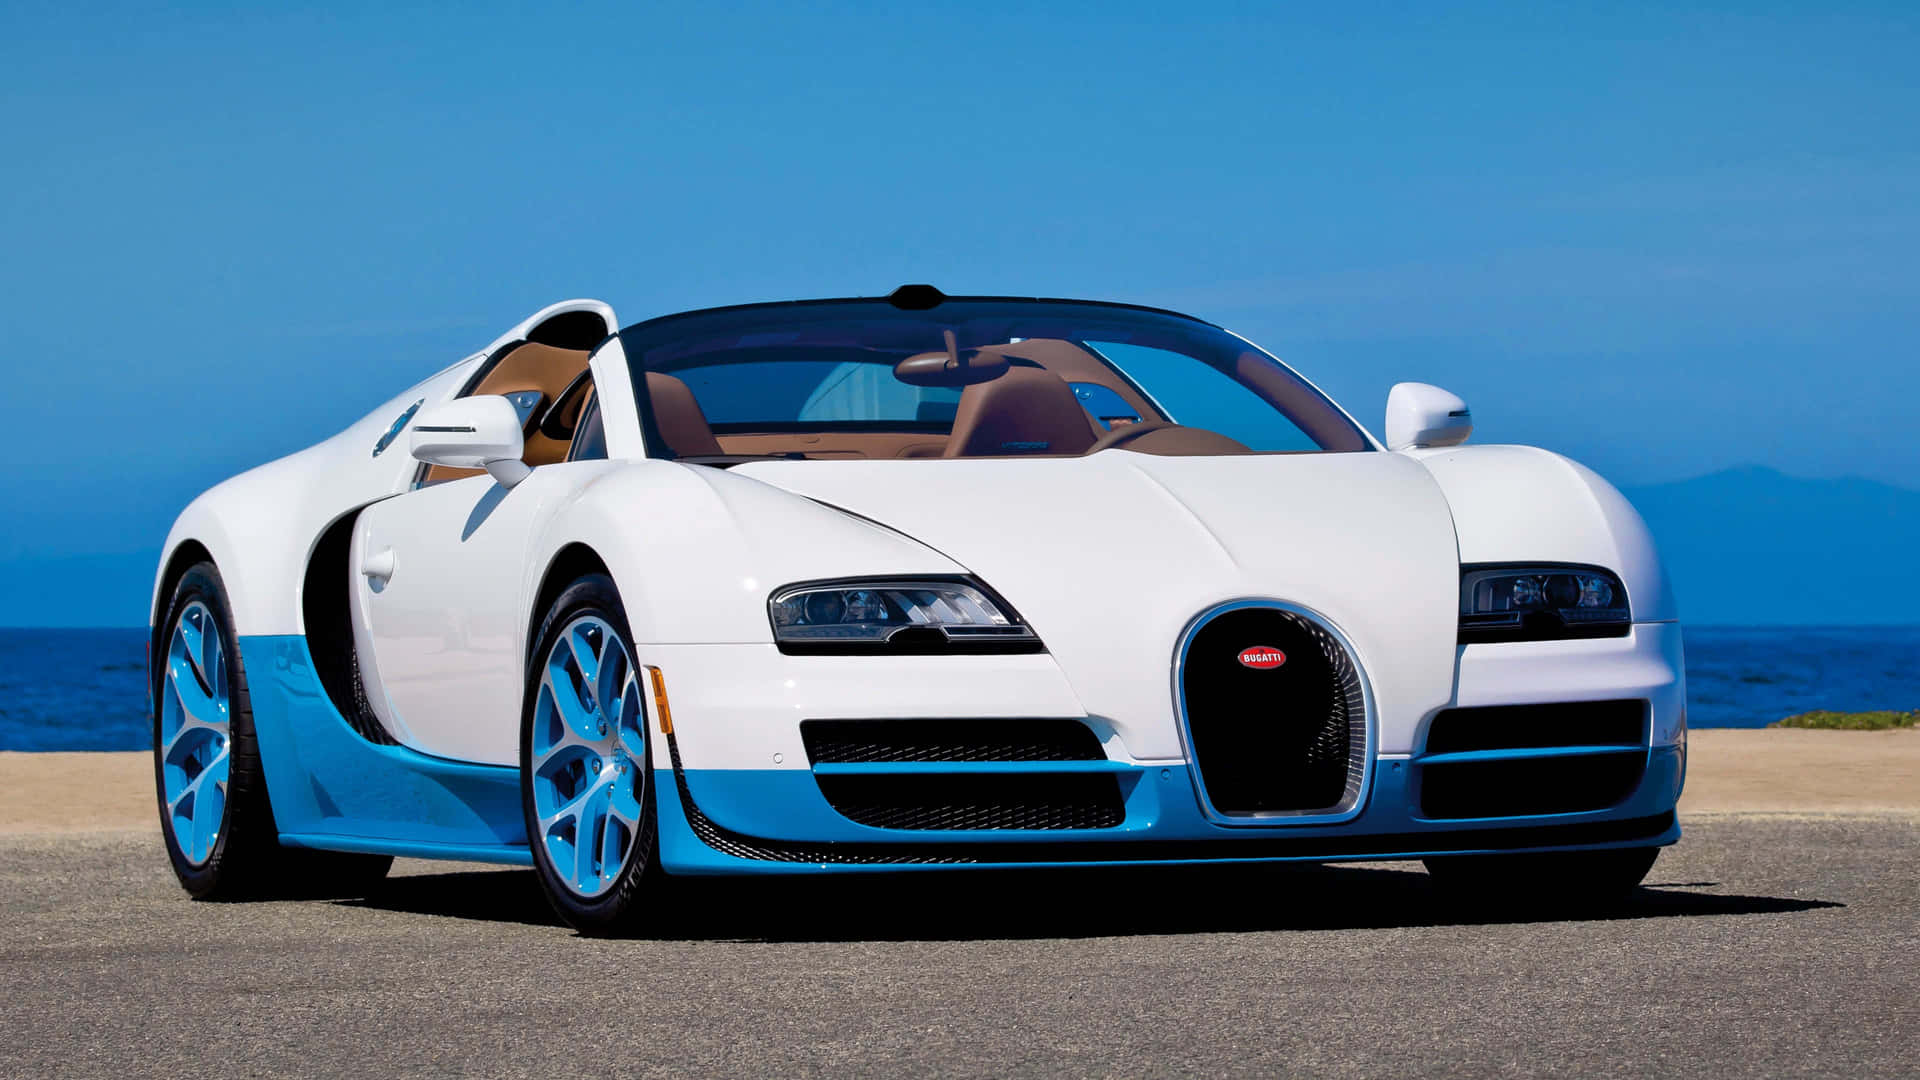 “The Bugatti 4k - Luxury At Its Finest” Wallpaper